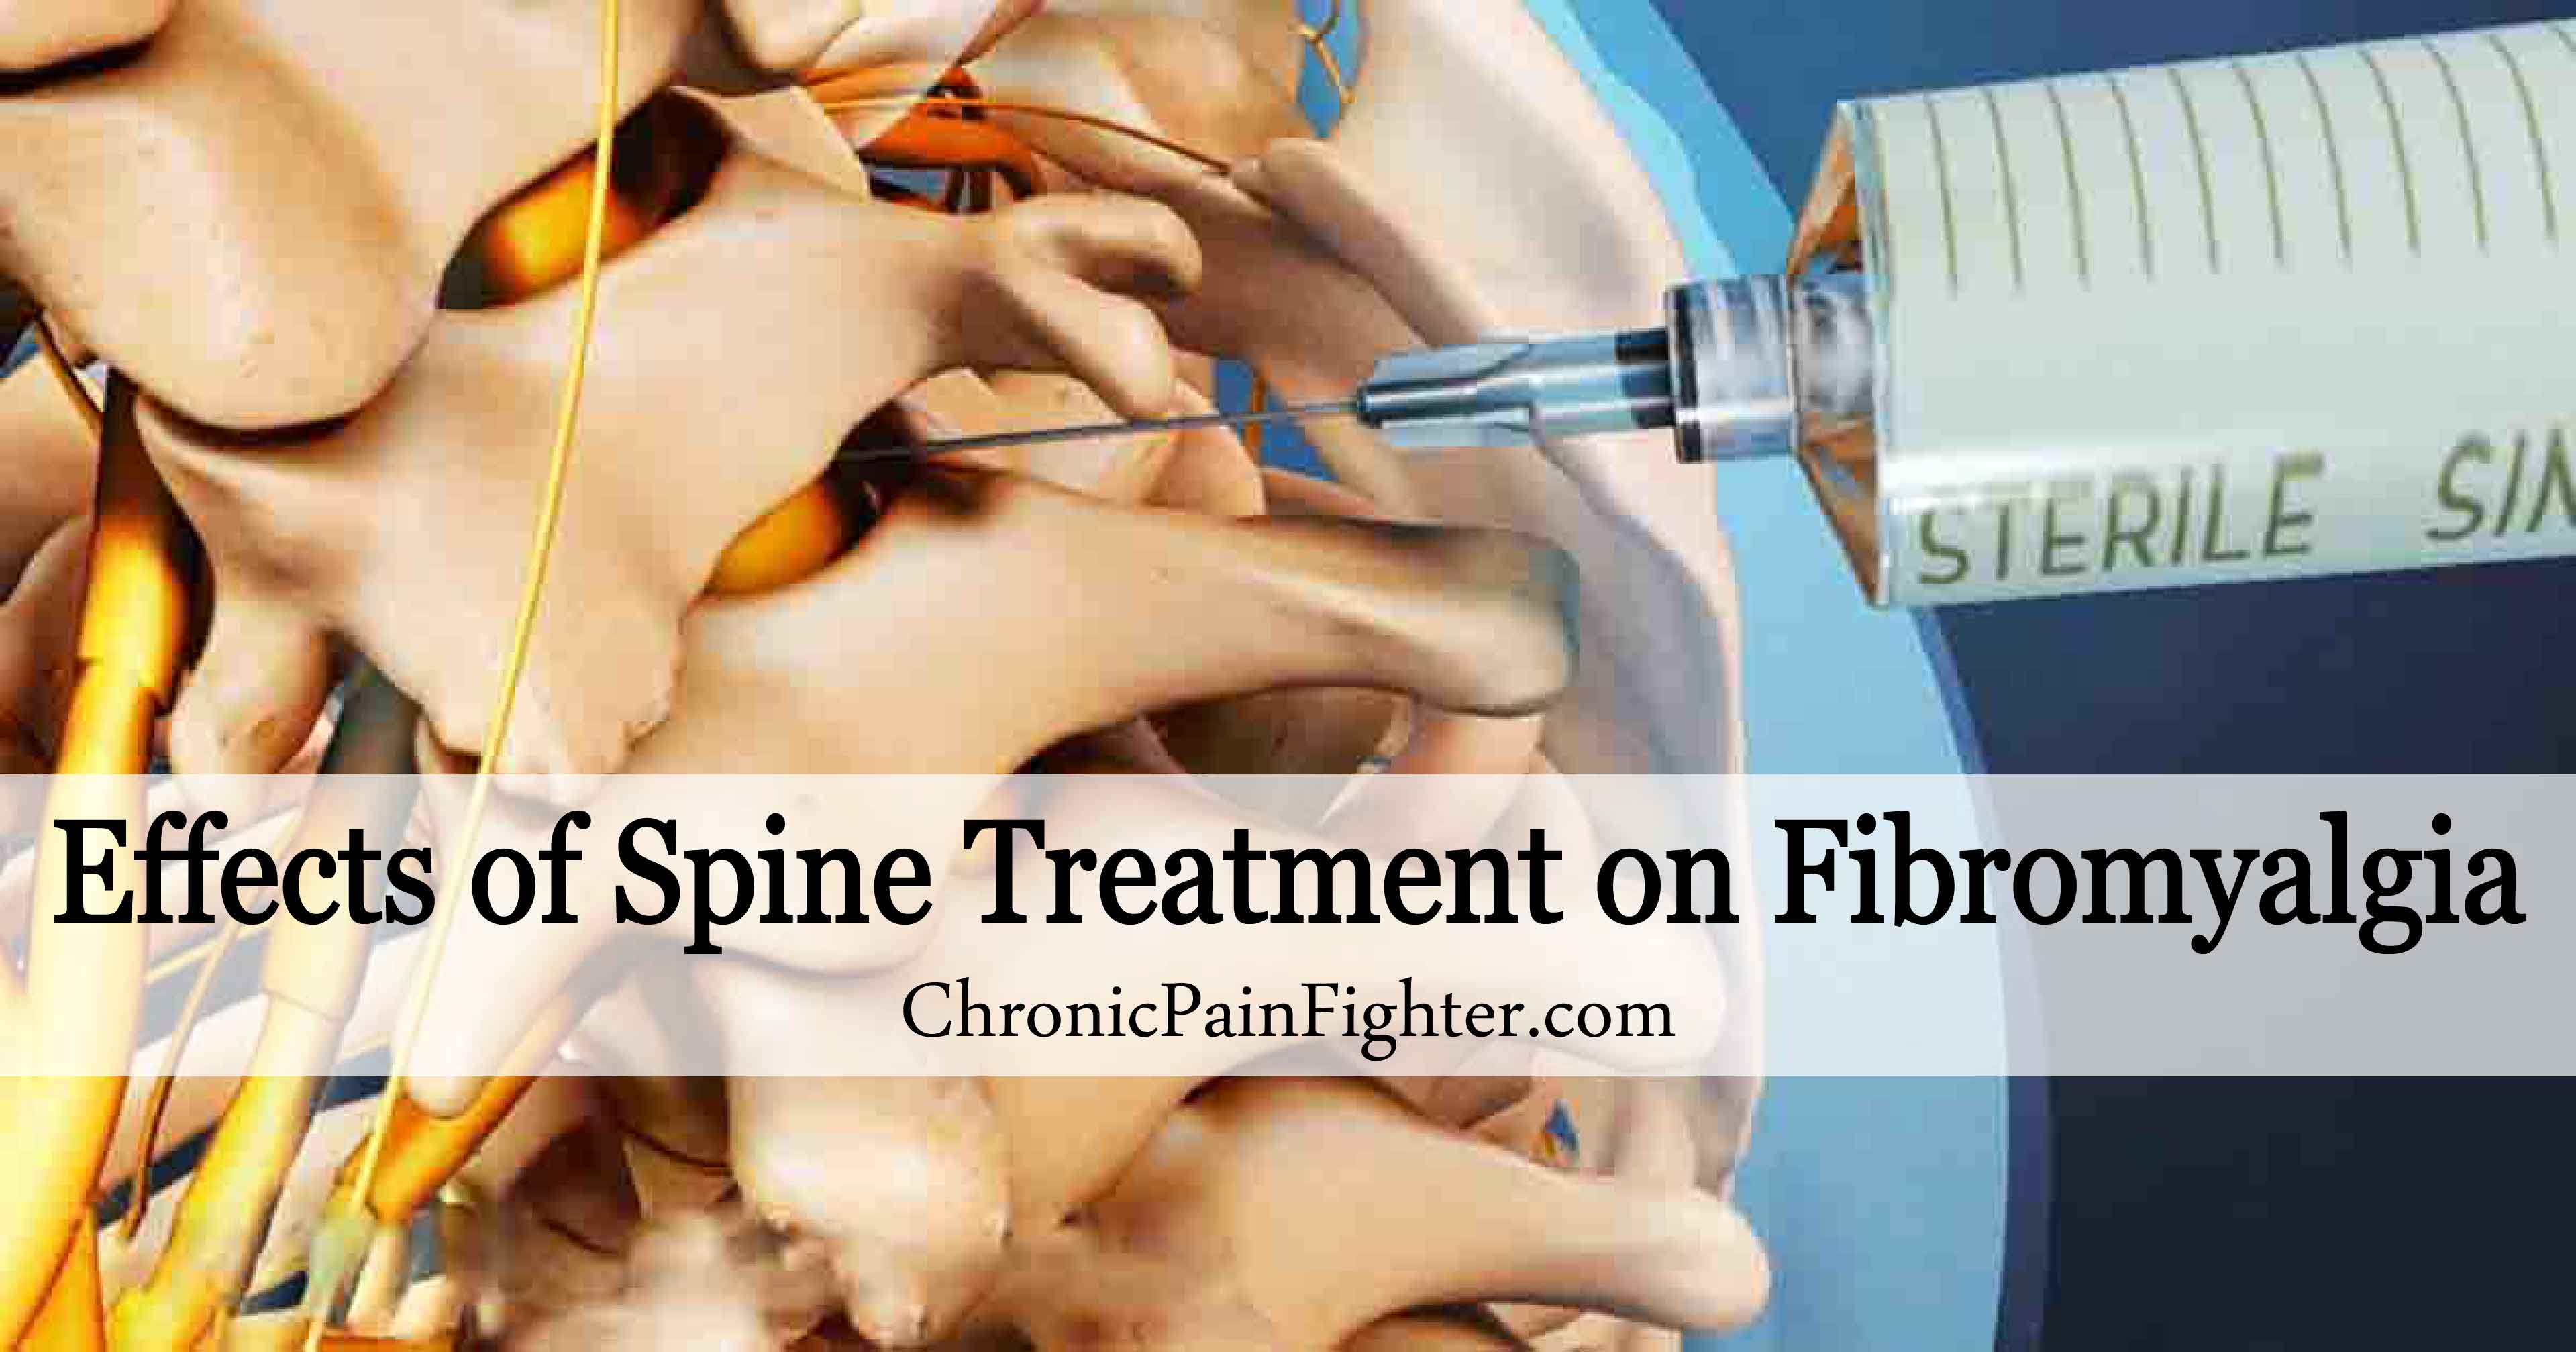 Effects of Spine Treatment on Fibromyalgia